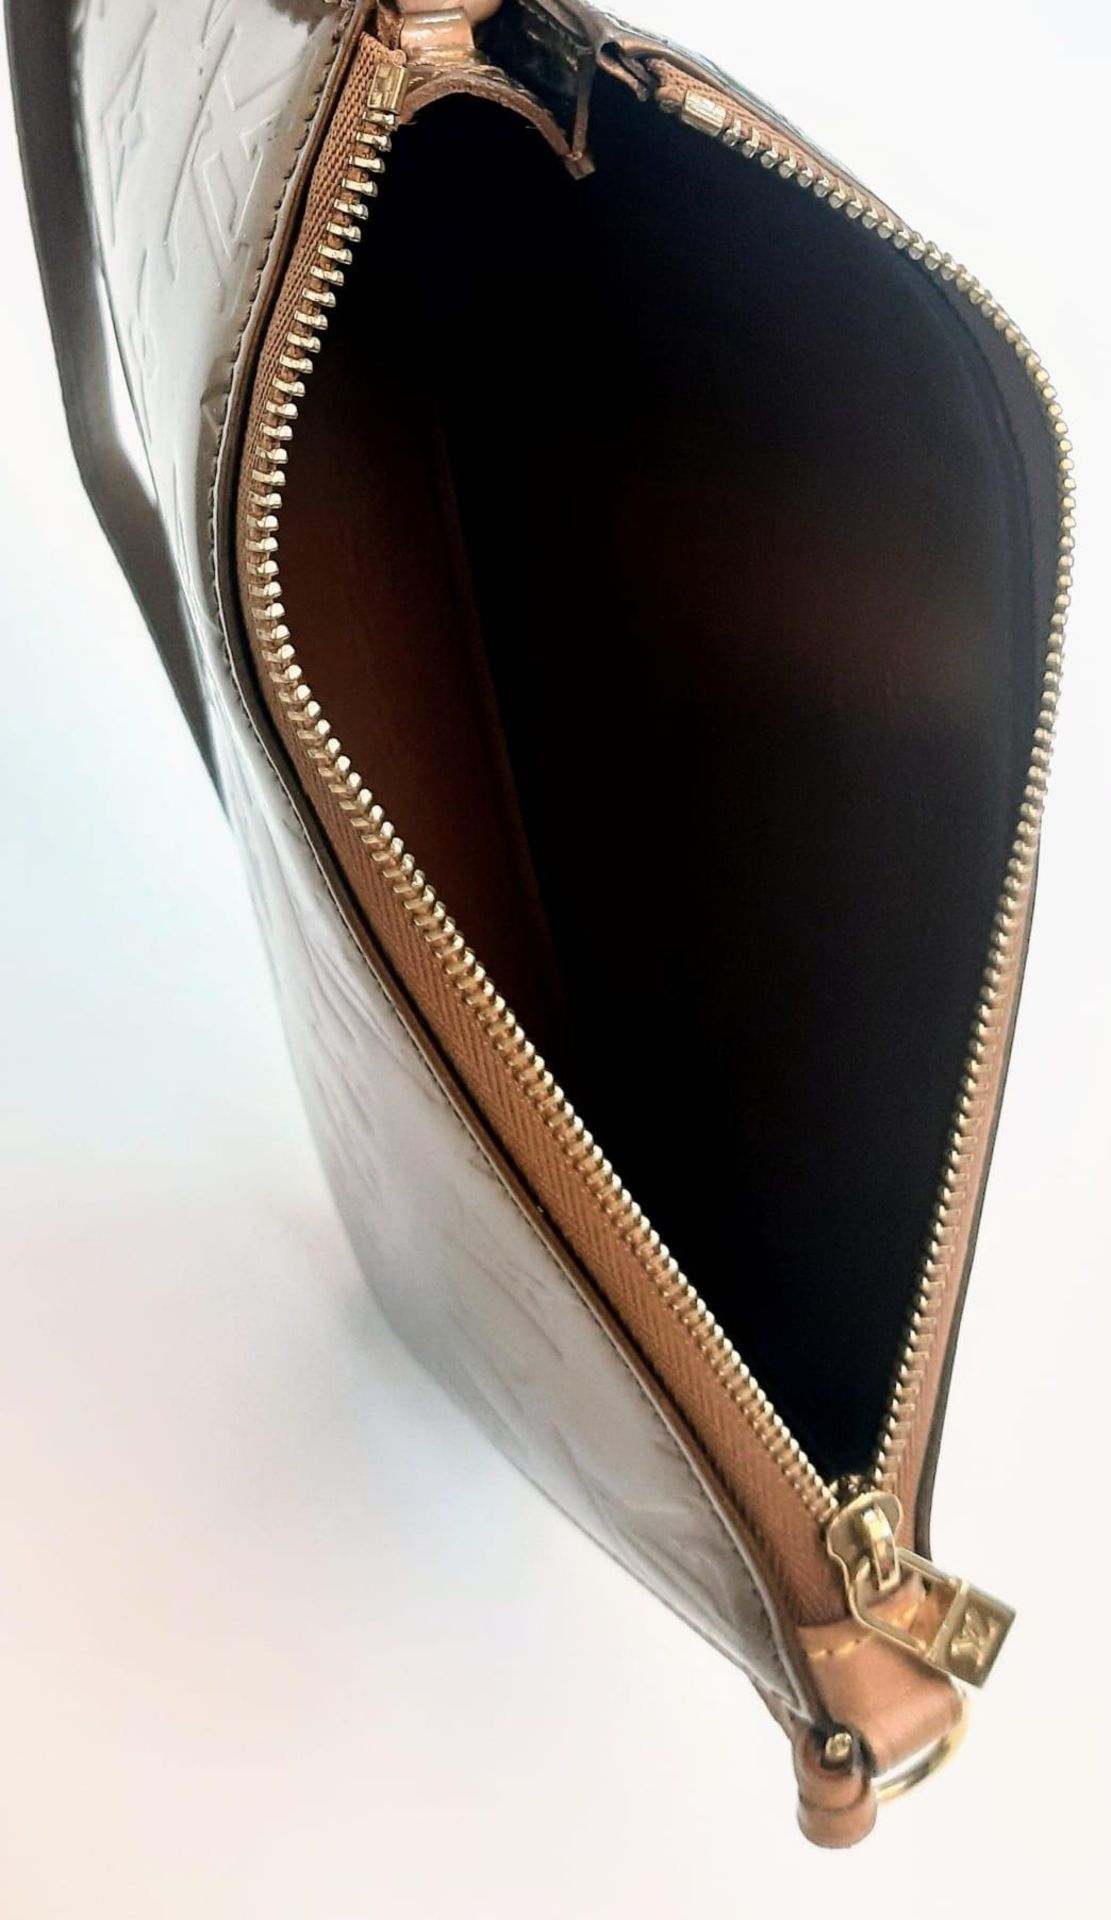 A Louis Vuitton Vernis Pochette Shoulder Bag in Copper, Emboss LV Detailing, Dark Tan Leather Strap. - Image 7 of 7